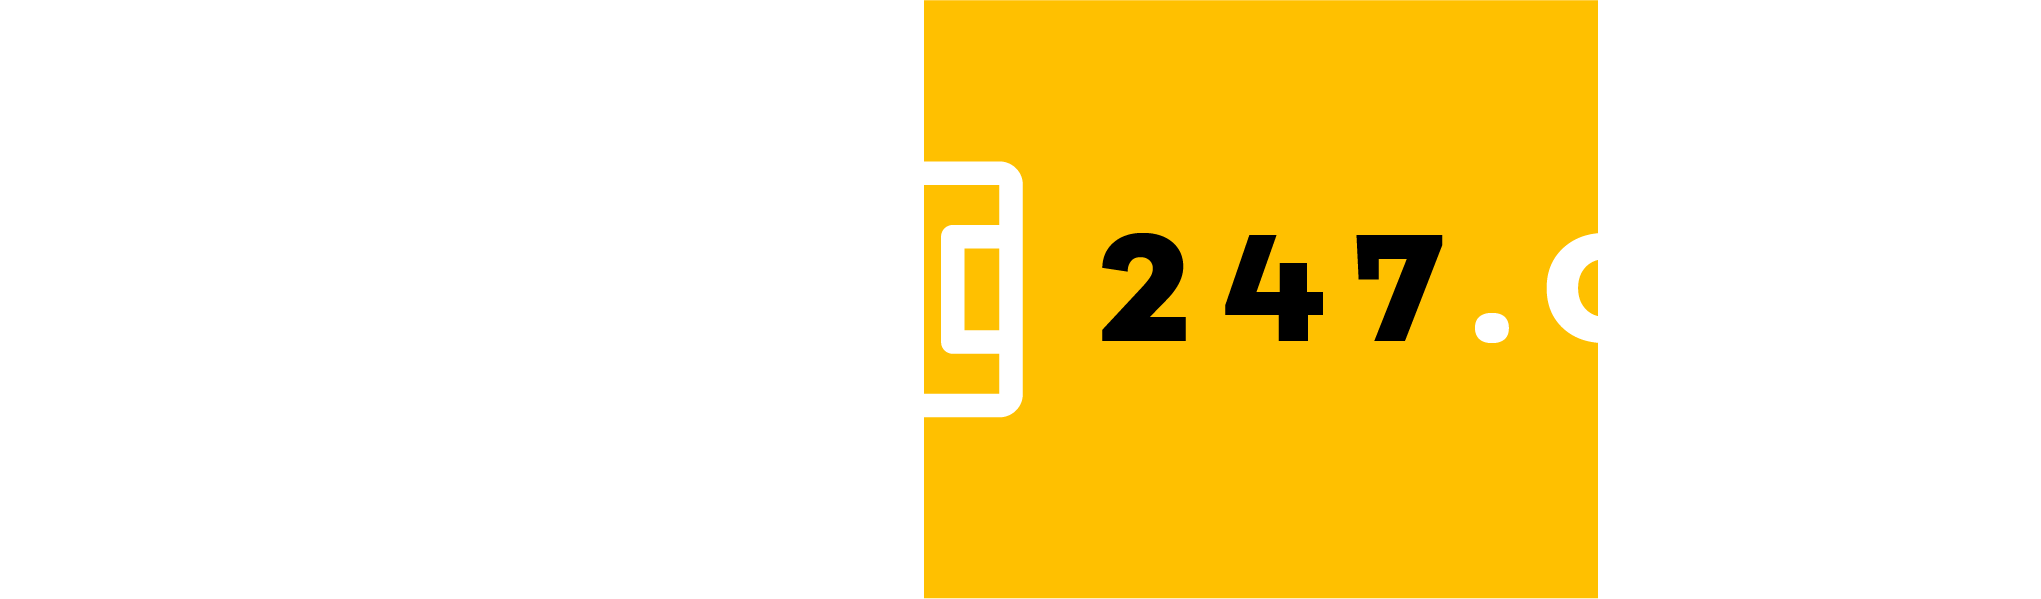 datsan247.com logo